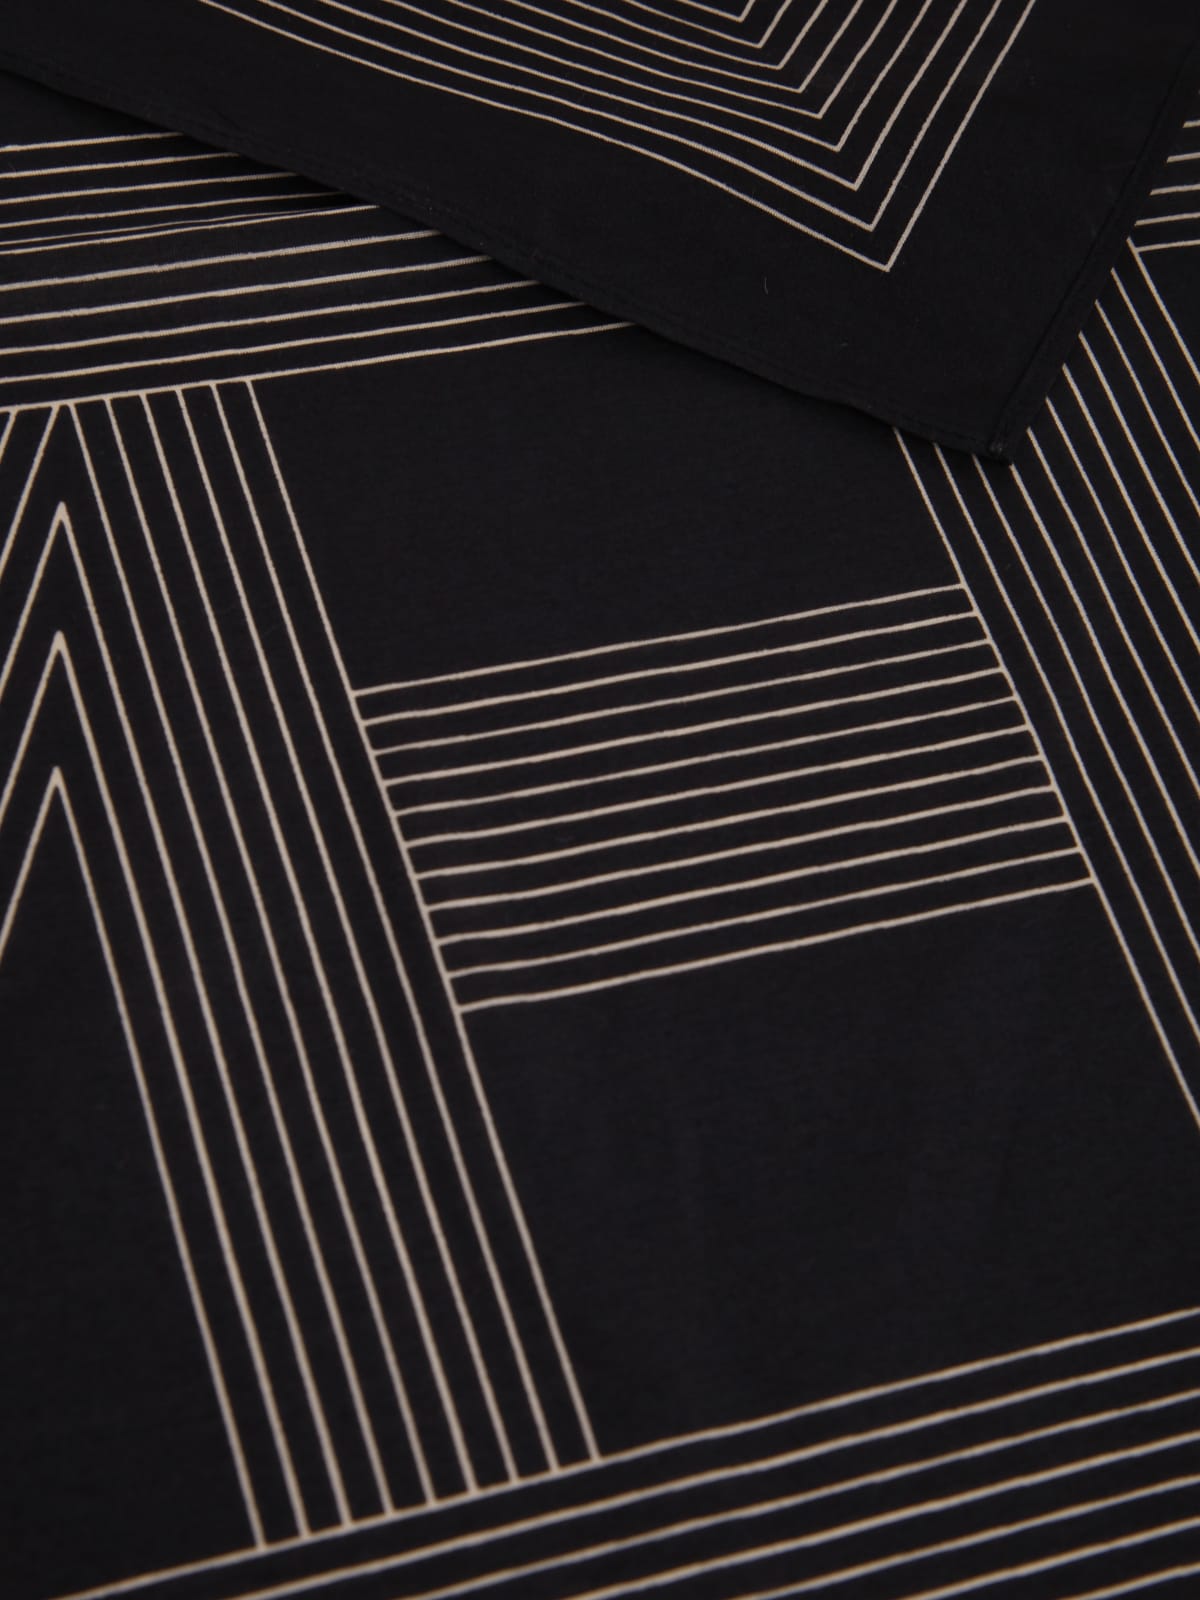 Embroidered monogram silk scarf black – Totême